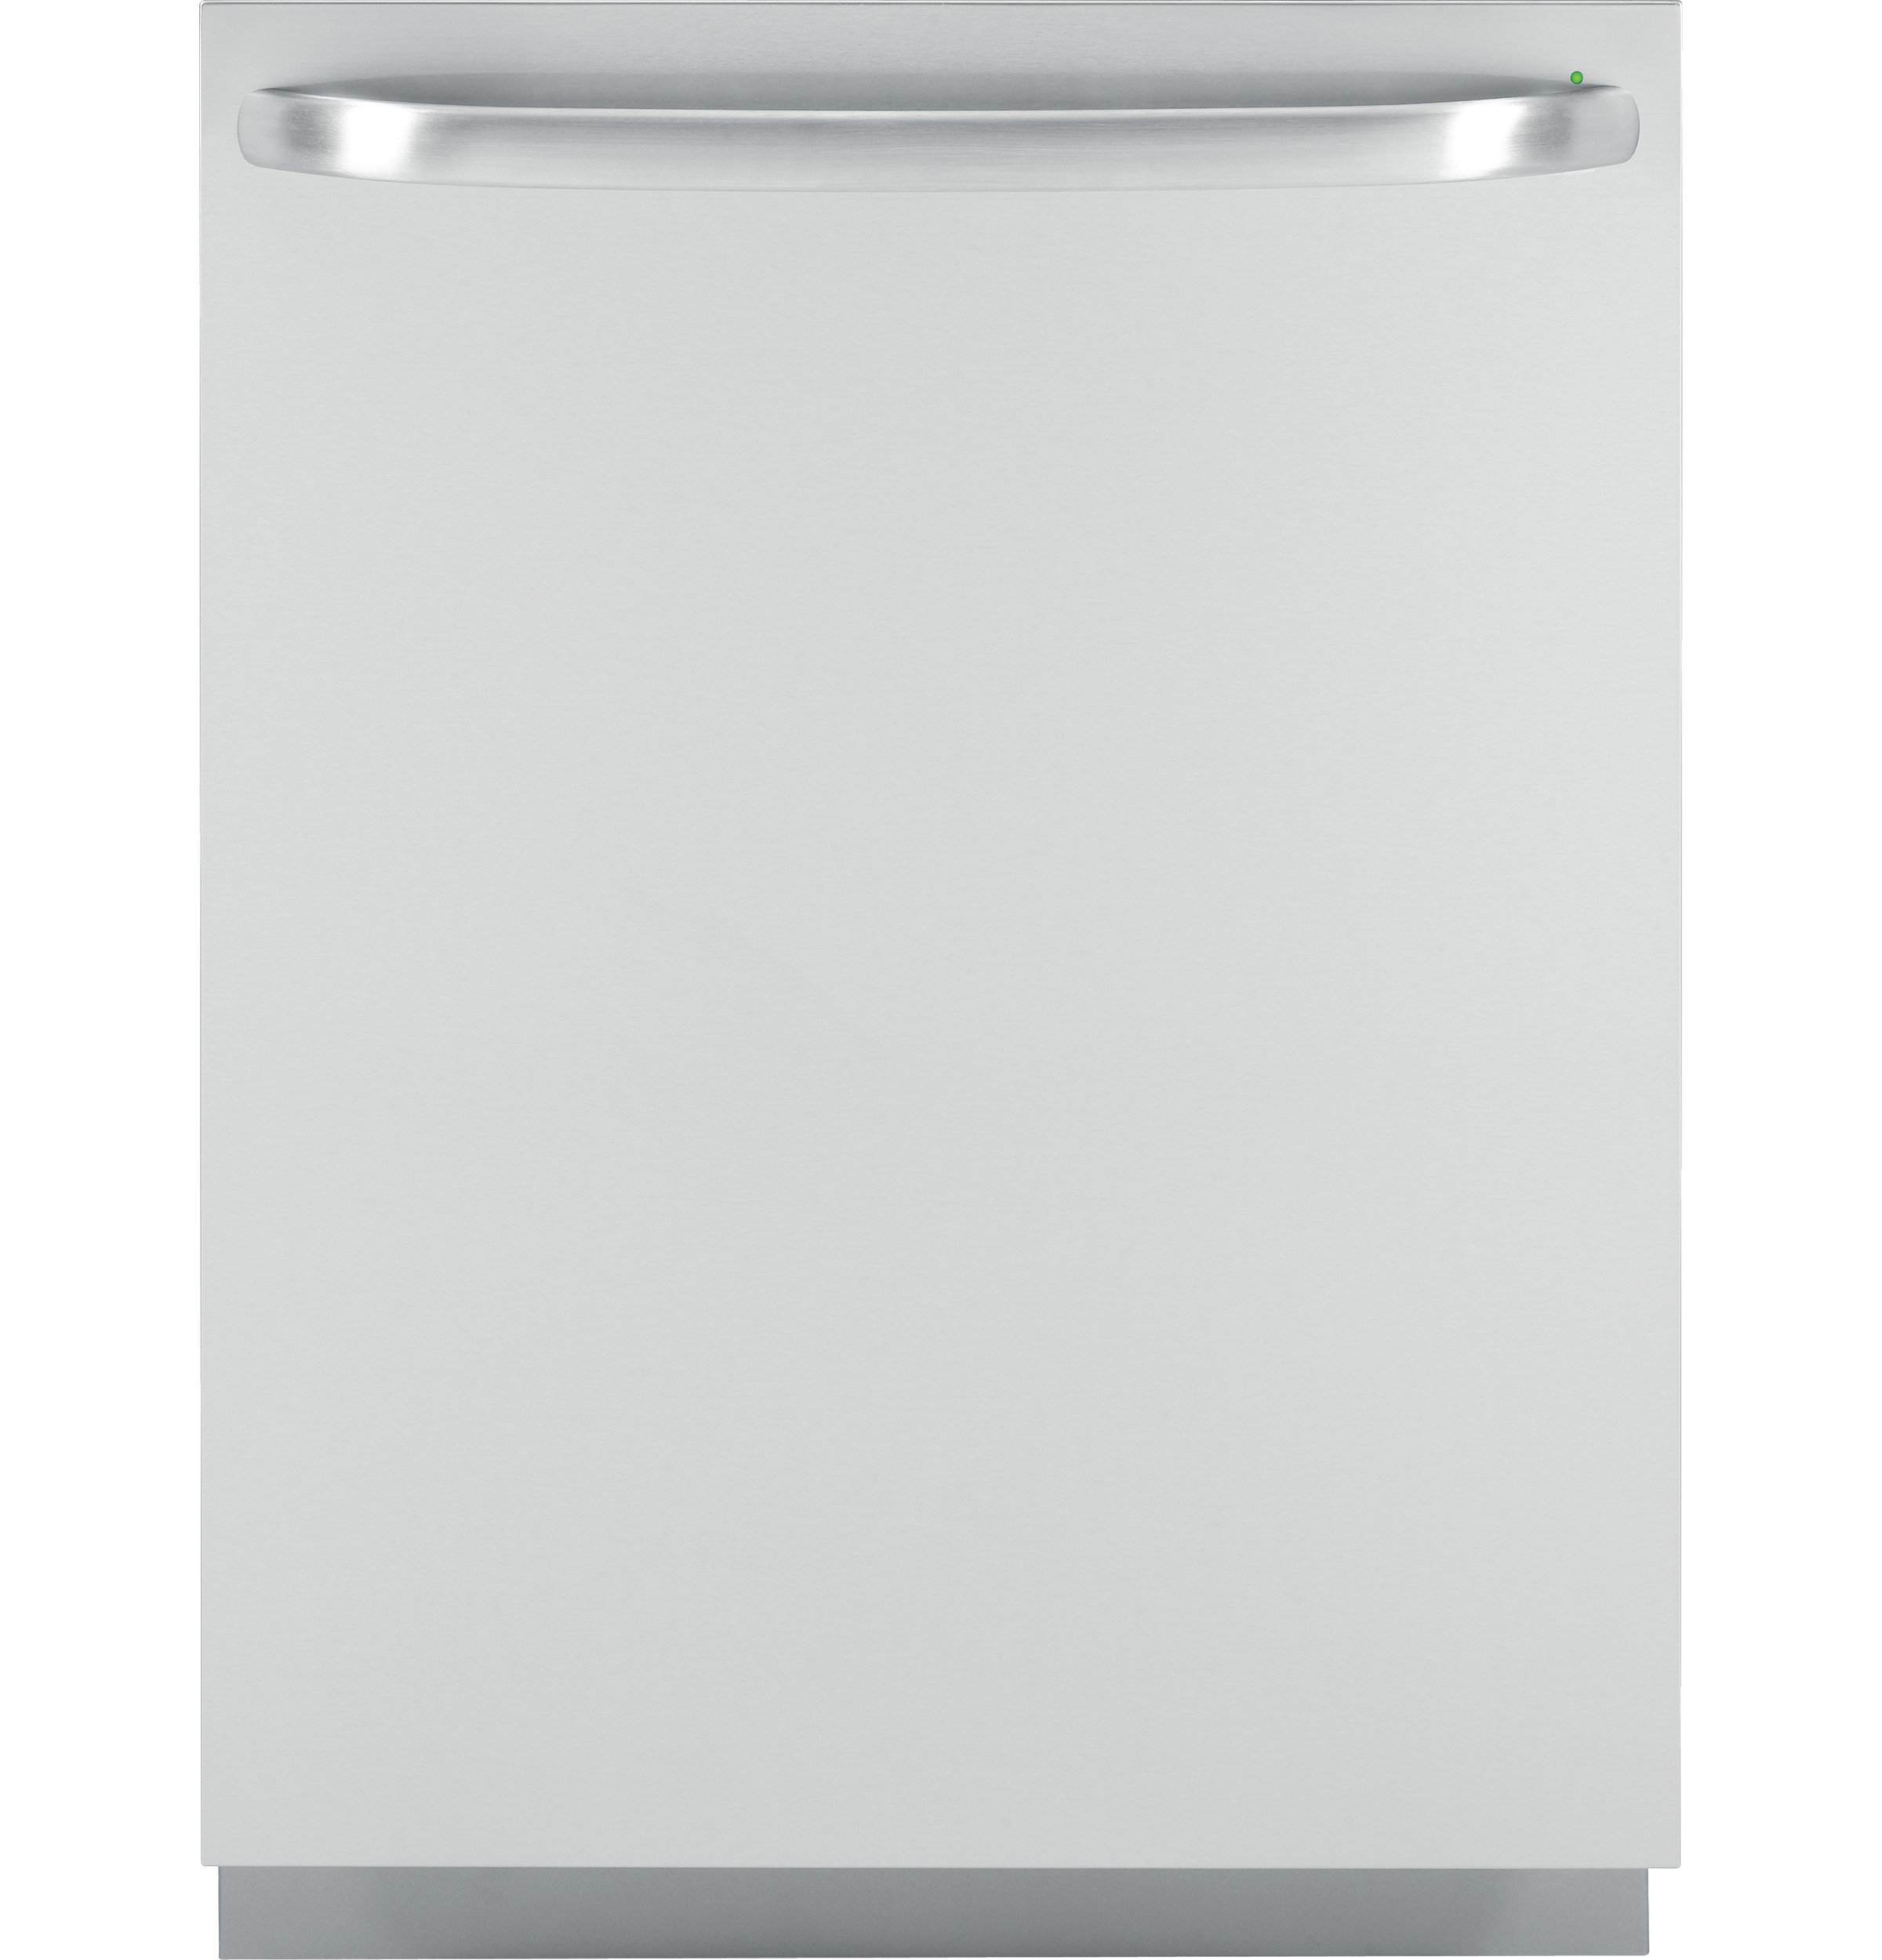 GE® Built-In Dishwasher with SmartDispense™ Technology